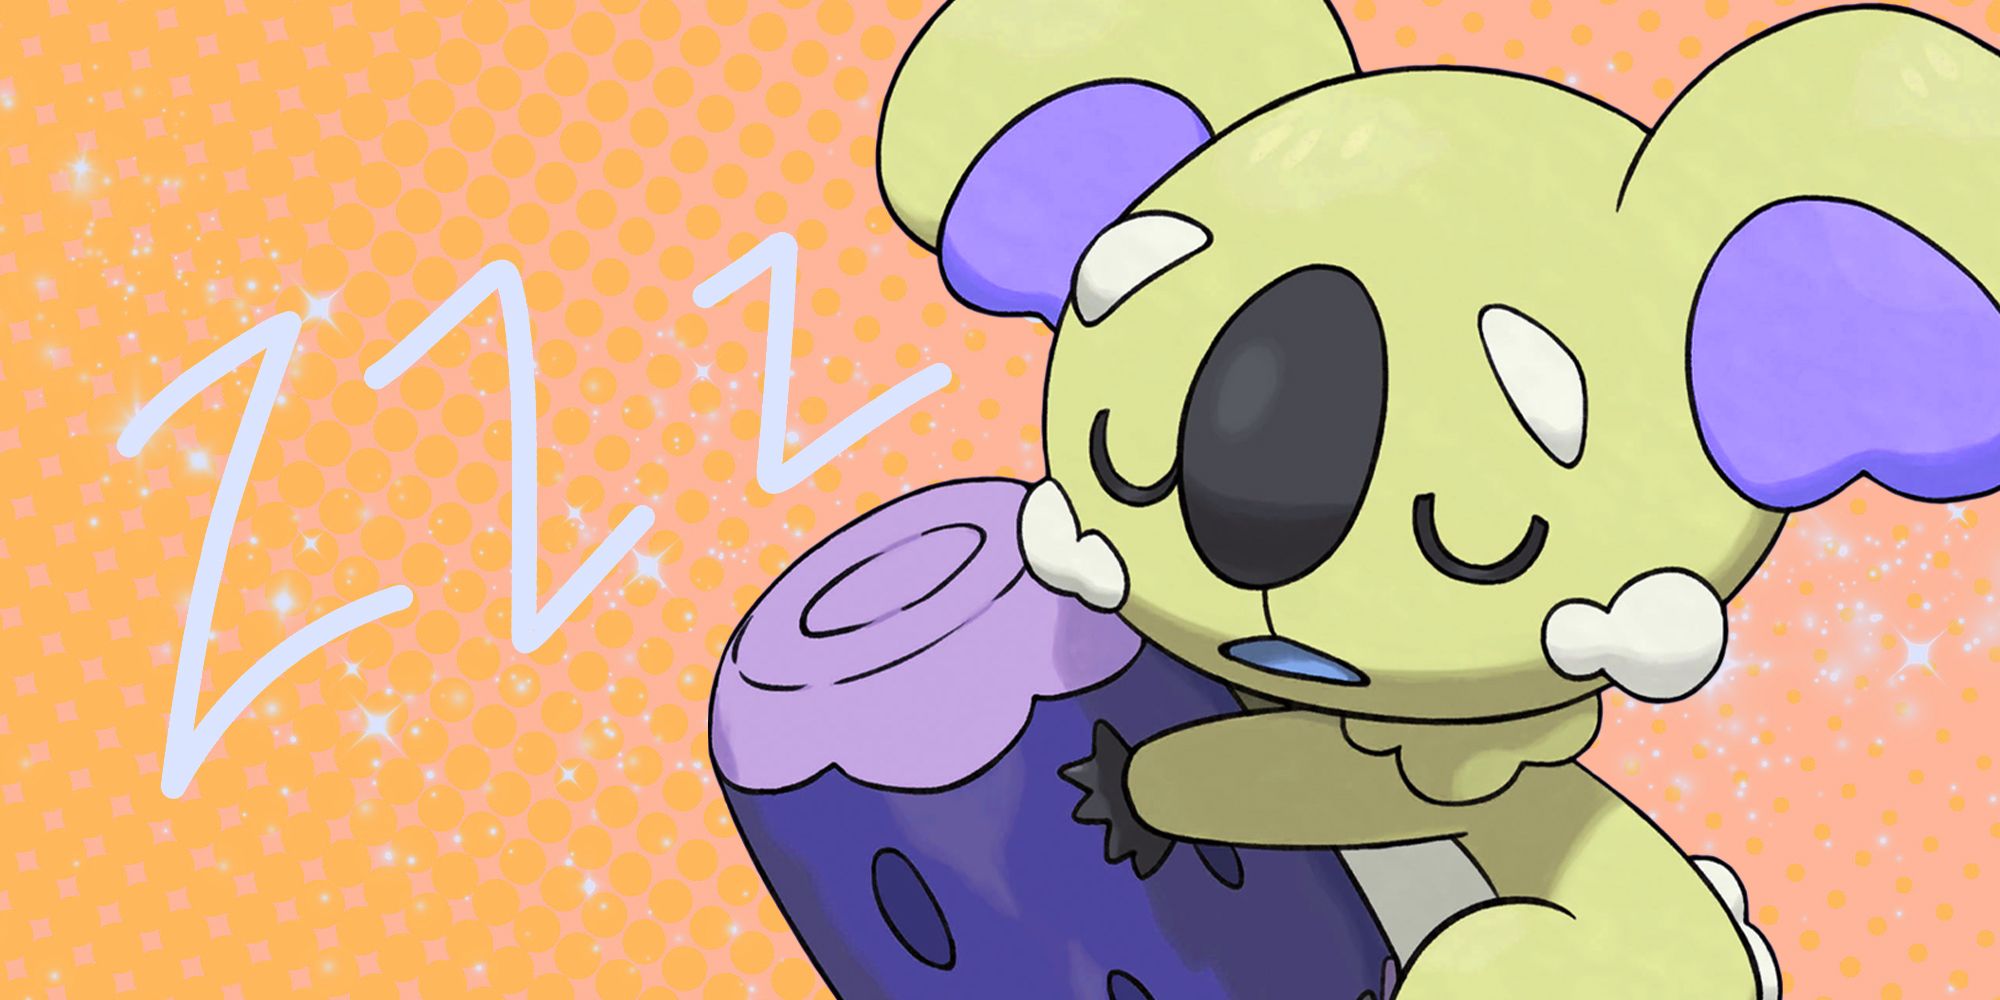 Pokemon Sleep shiny grinders will be like, Pokémon Sleep